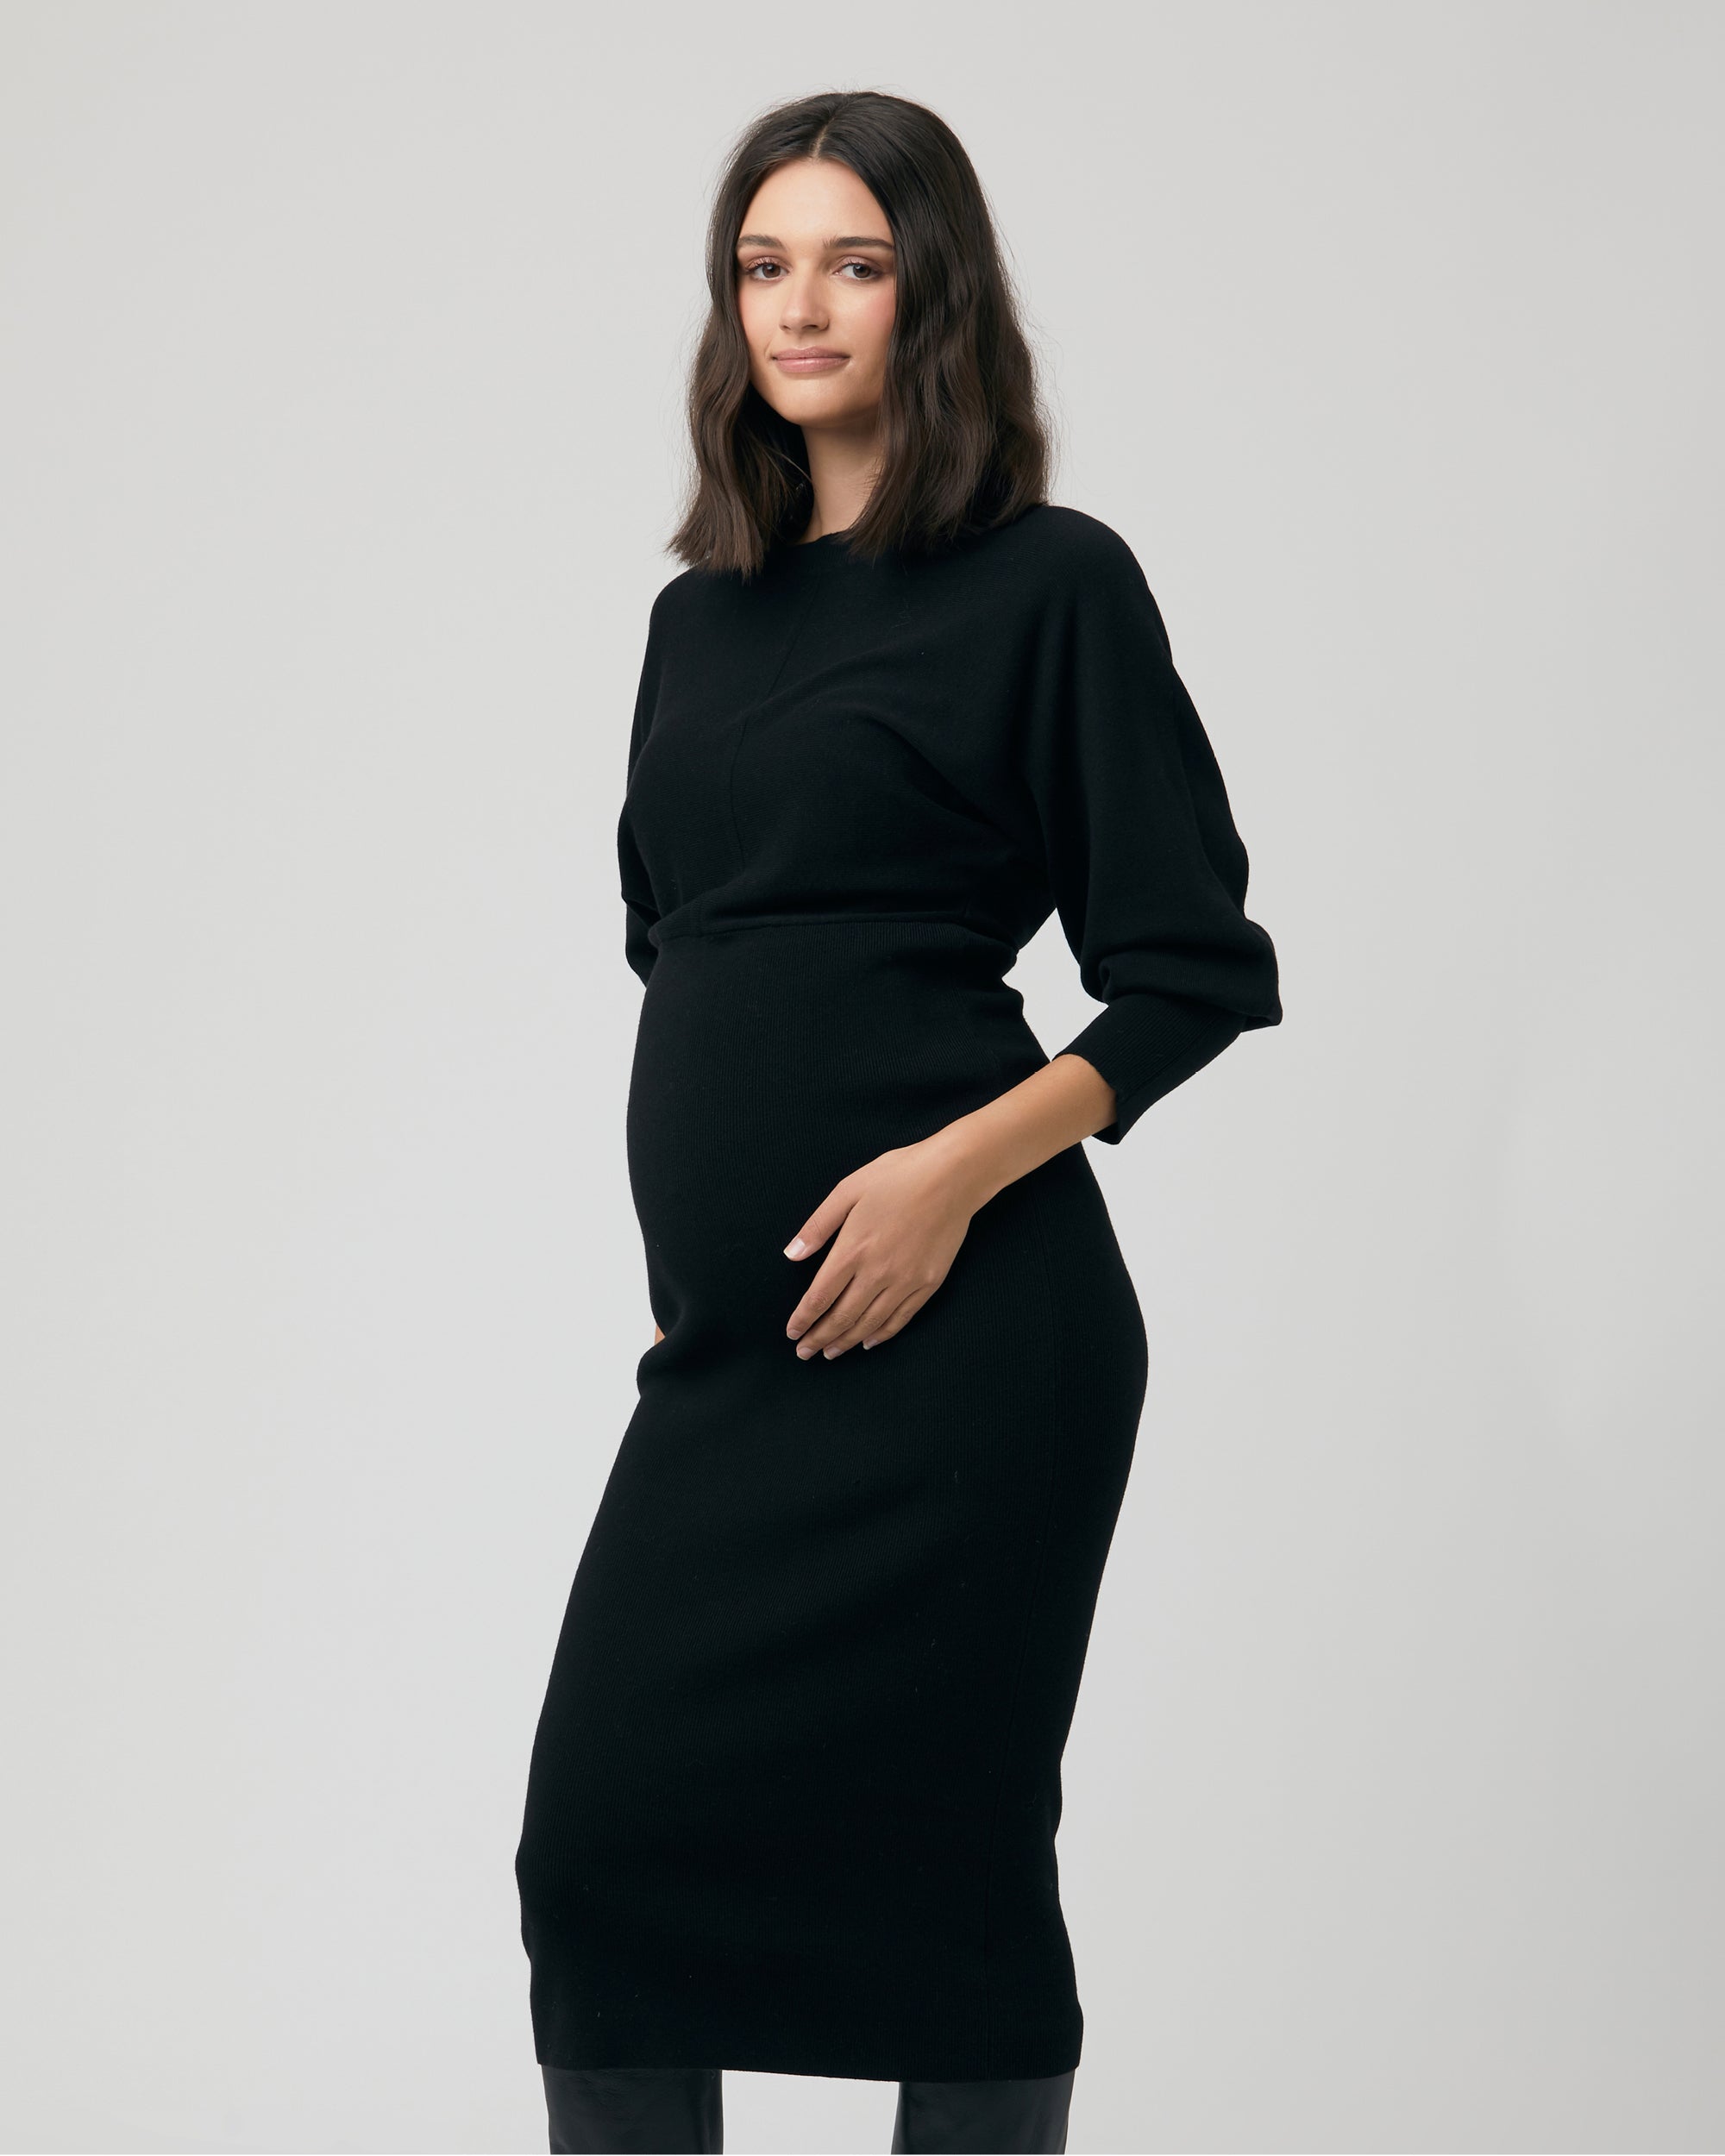 Bmama Maternity Pregnant Panthera V-Neck Rib-knit Tie Nursing Bodycon Dress  GM008 (Leo)